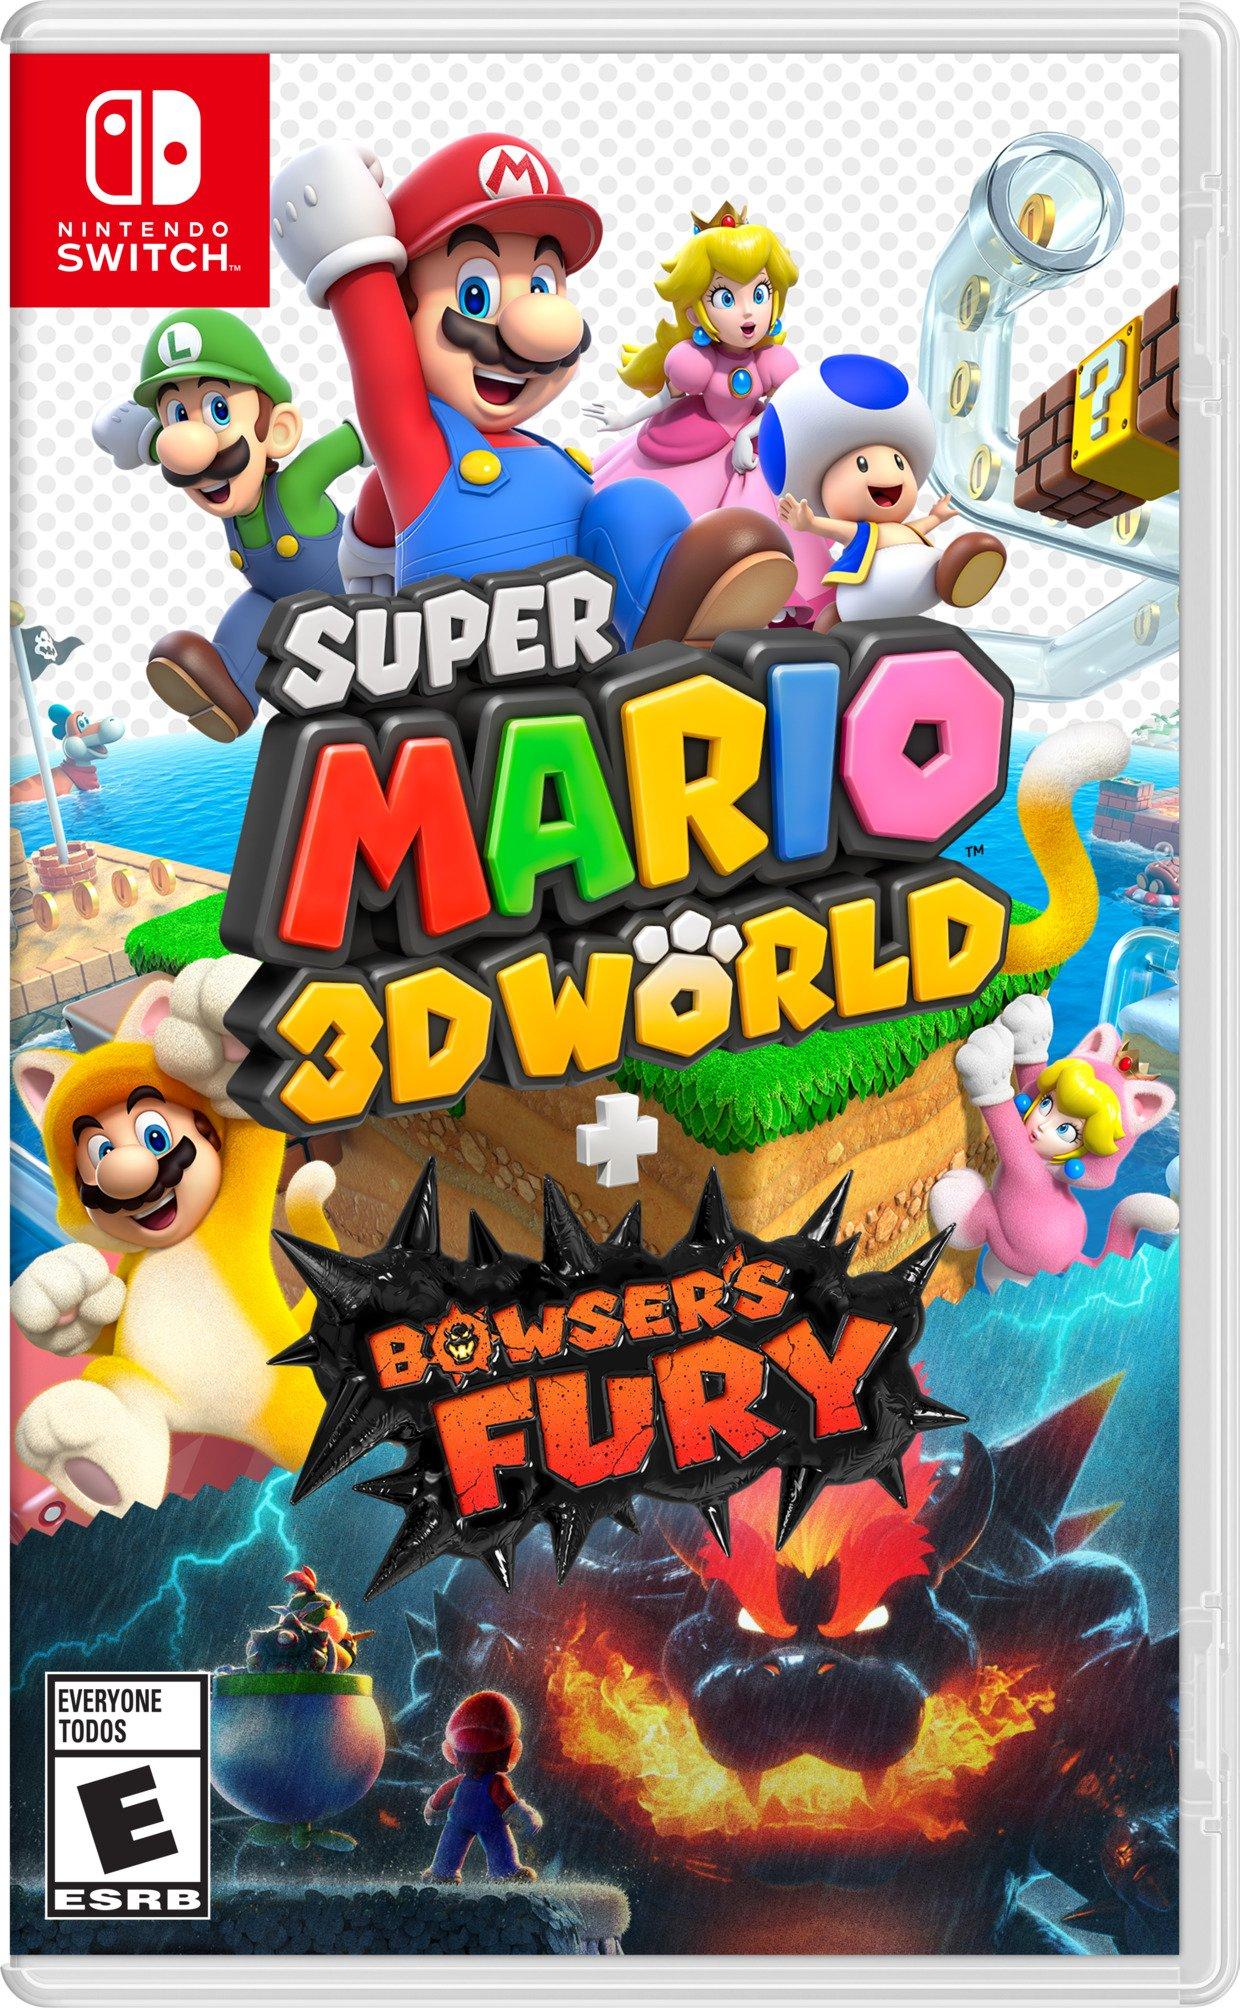 mario 3d world switch